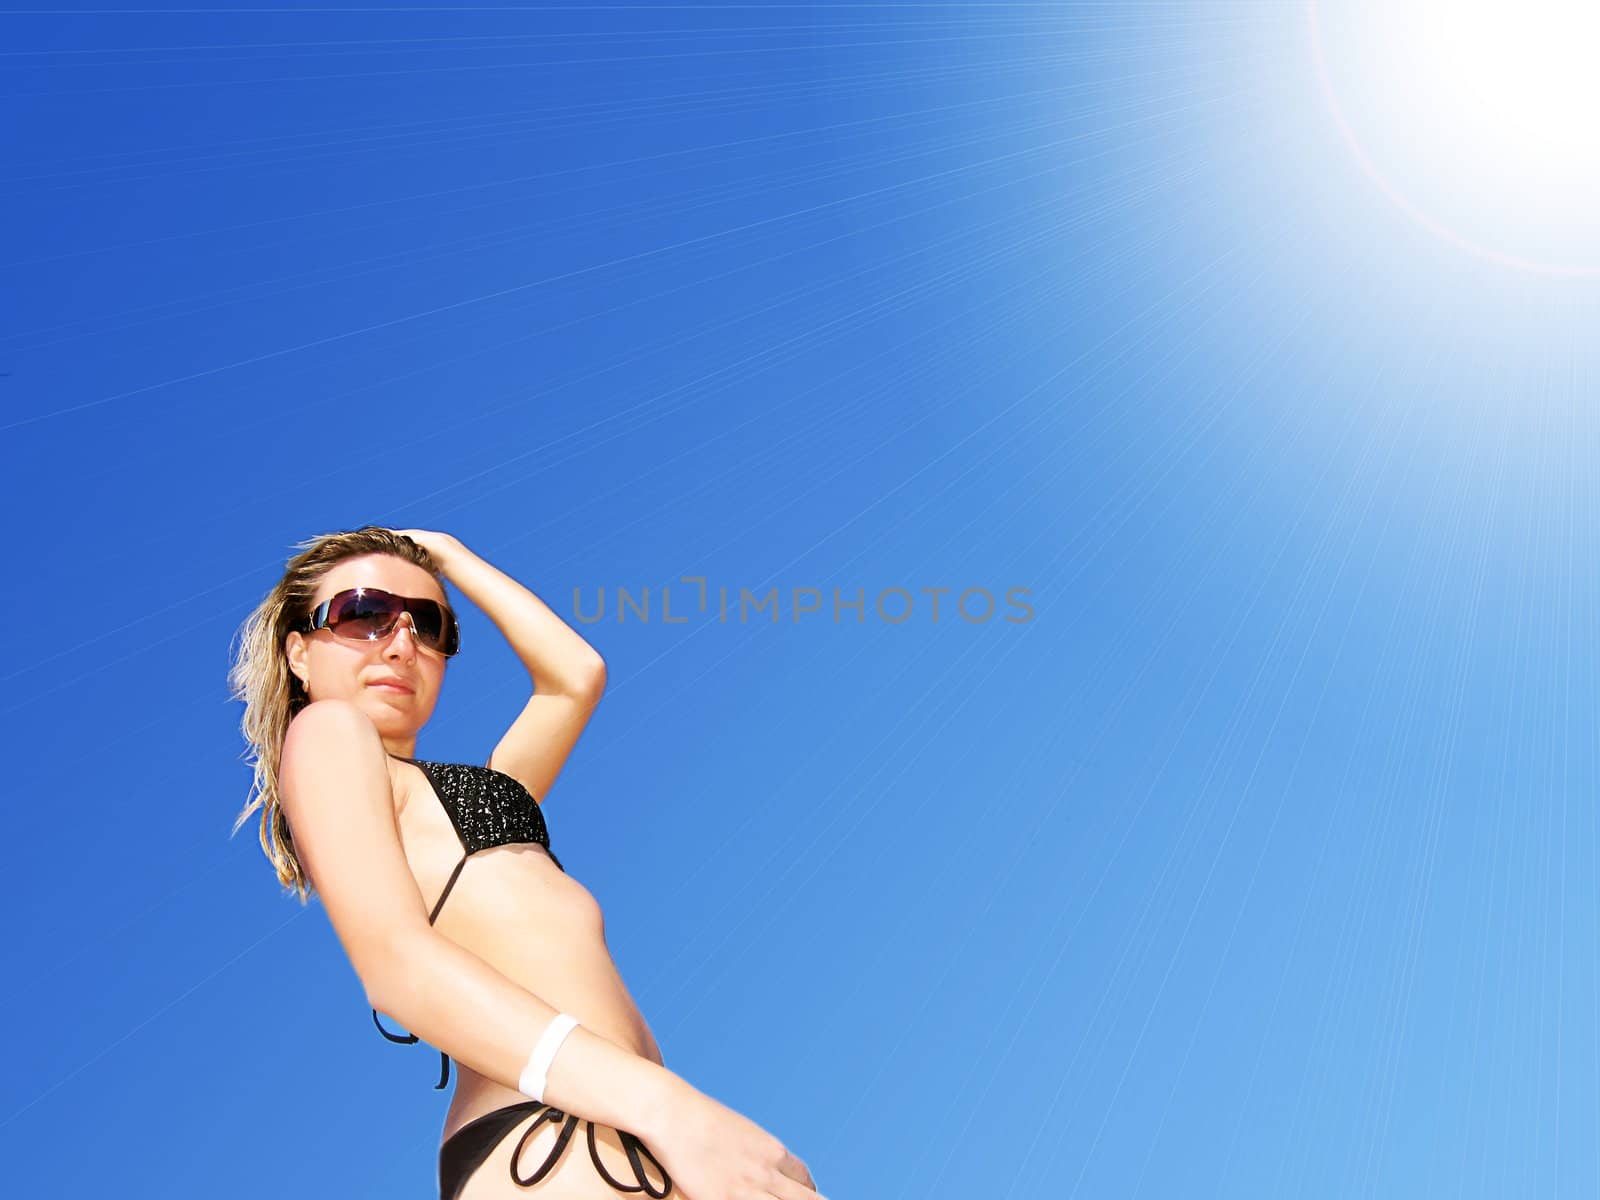 Woman in bikini against bright sun over blue sky